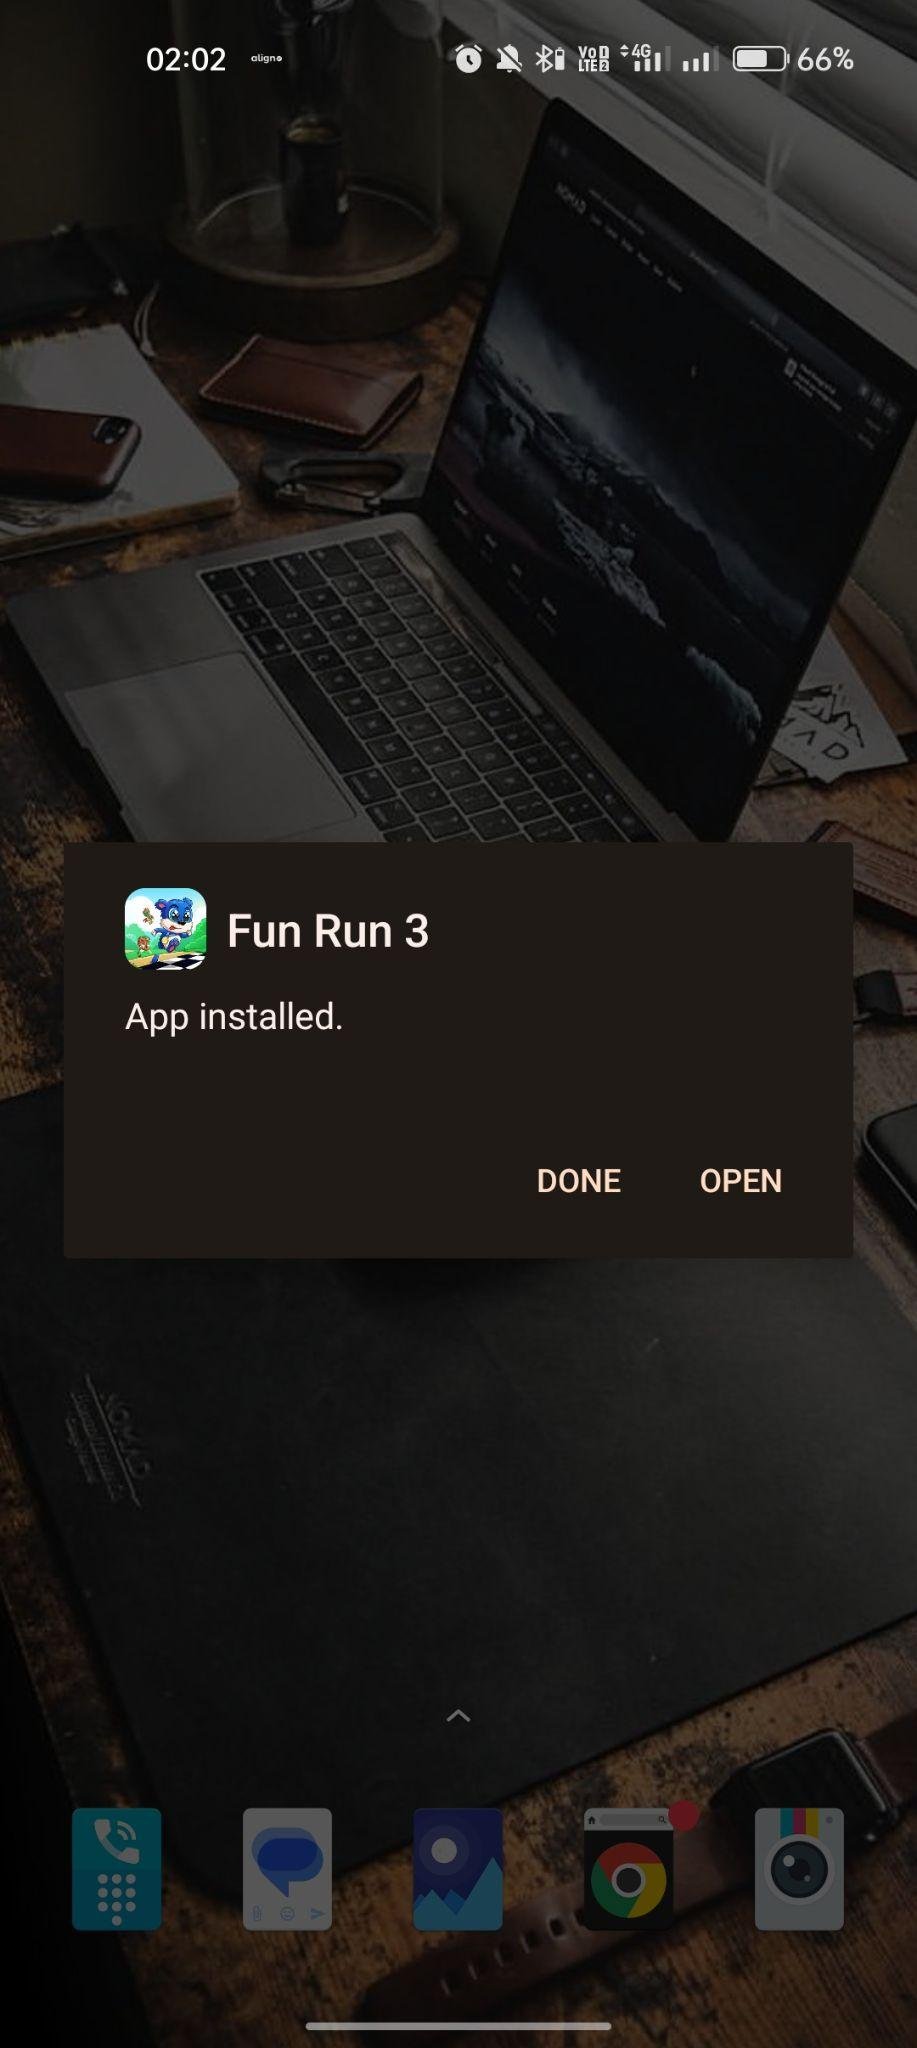 Fun Run 3 apk installed